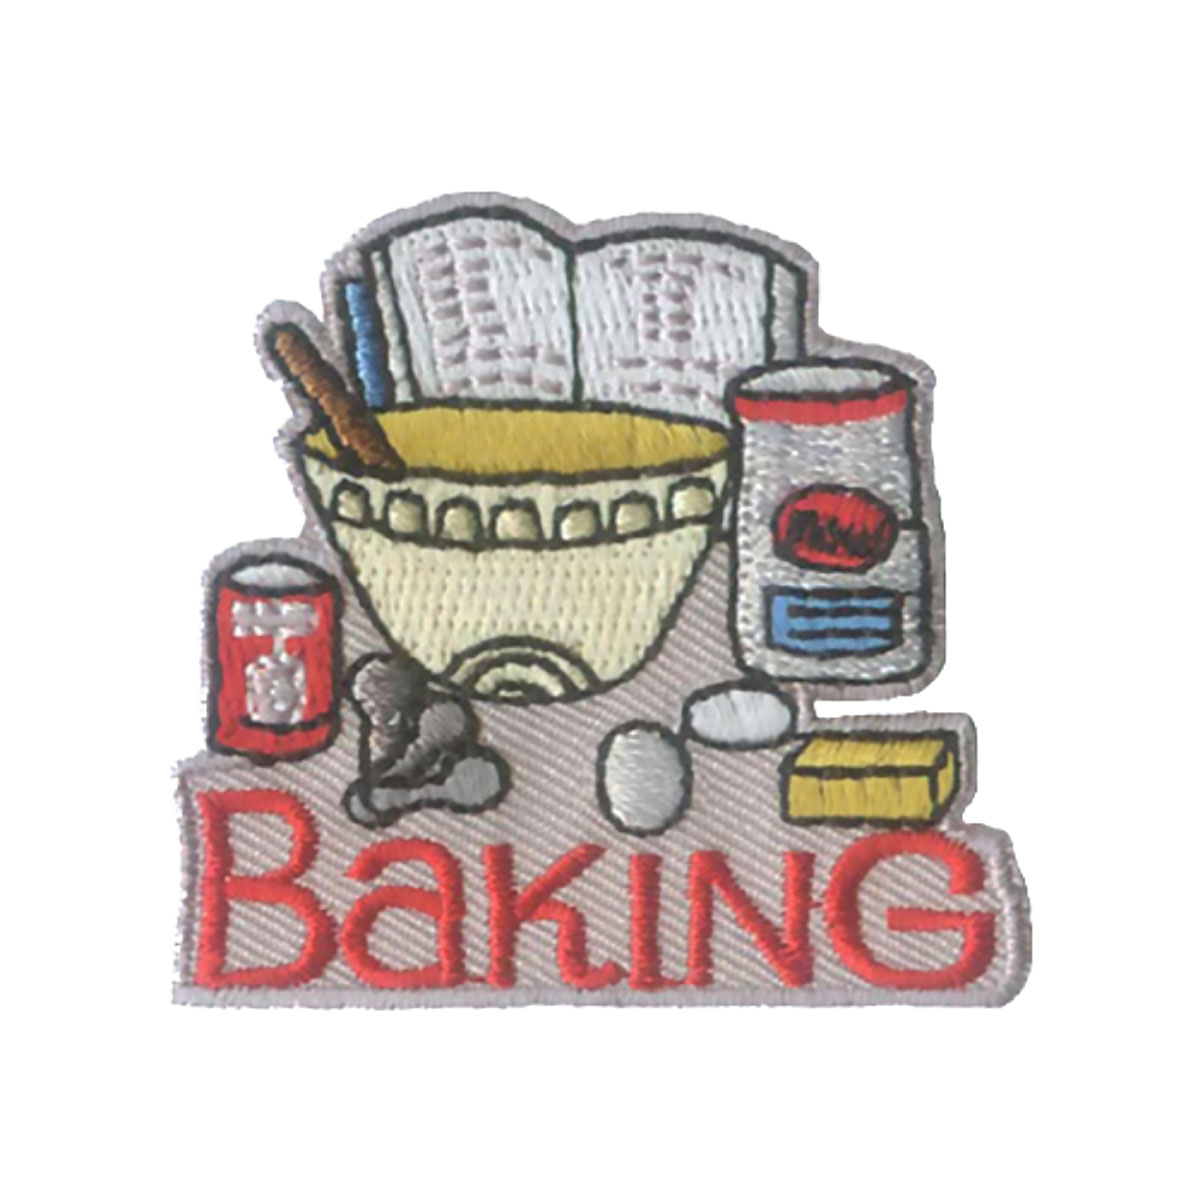 Baking - W